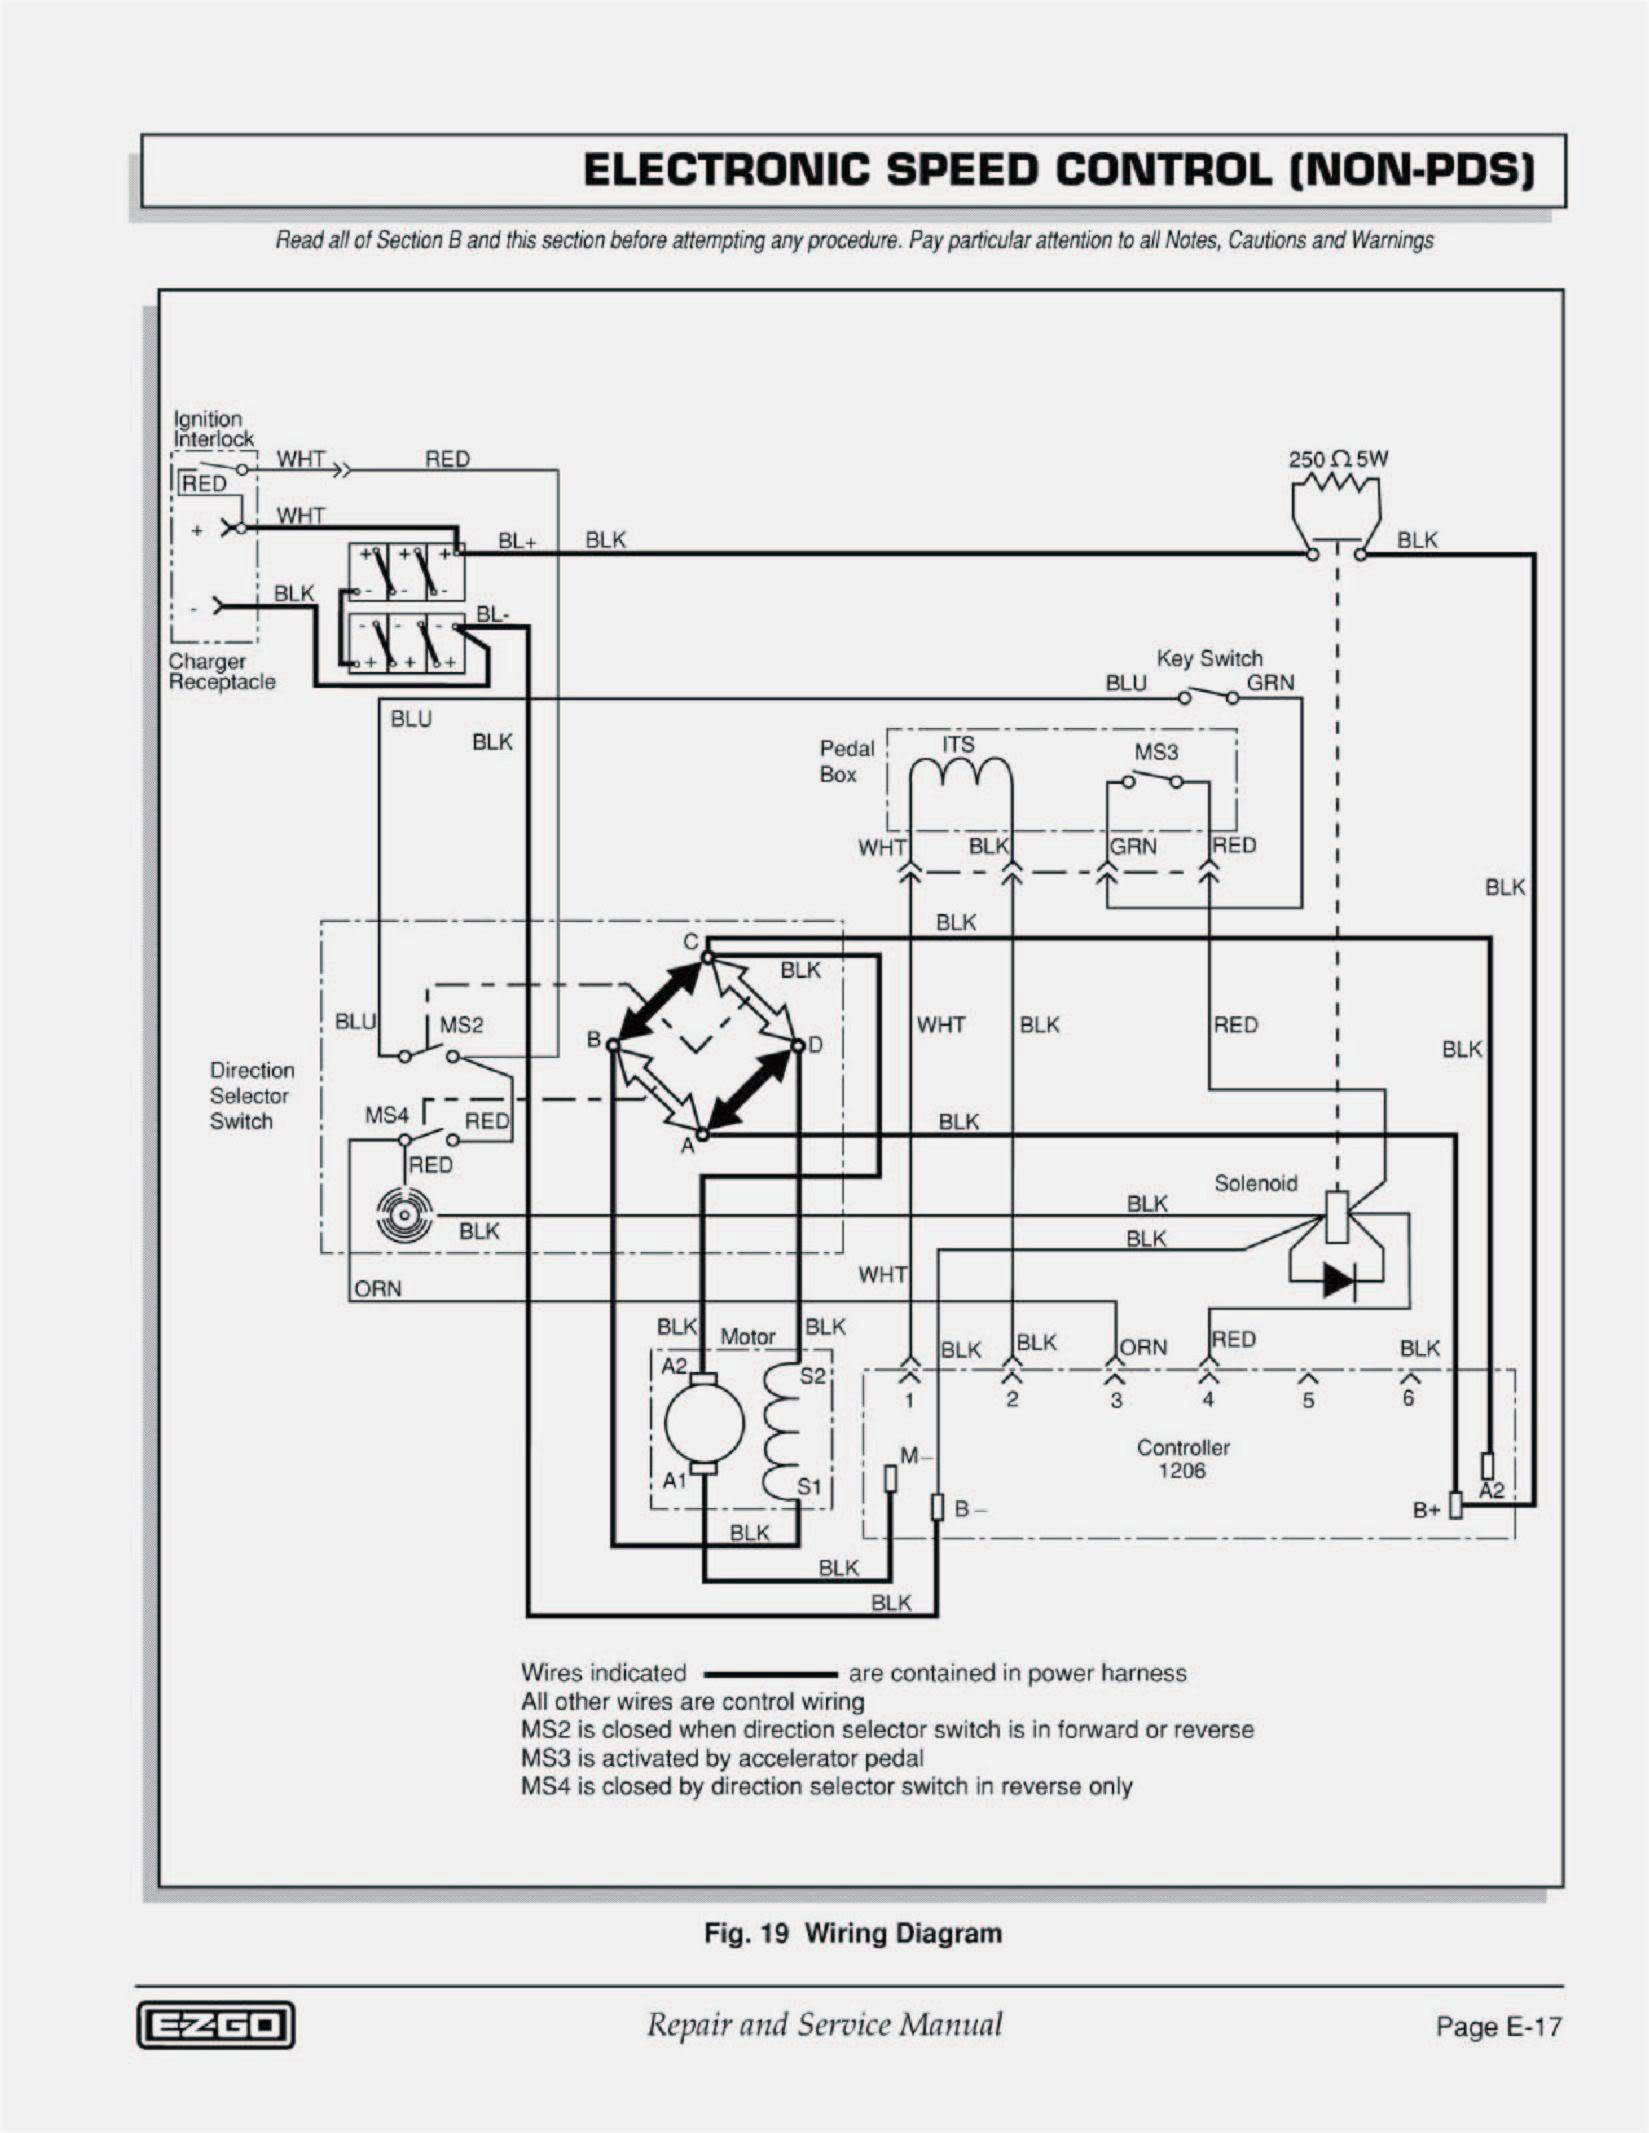 Diagram Easy Go Gas Golf Cart Wiring Diagram Full Version Hd Quality Wiring Diagram Diagramingco Digitalight It